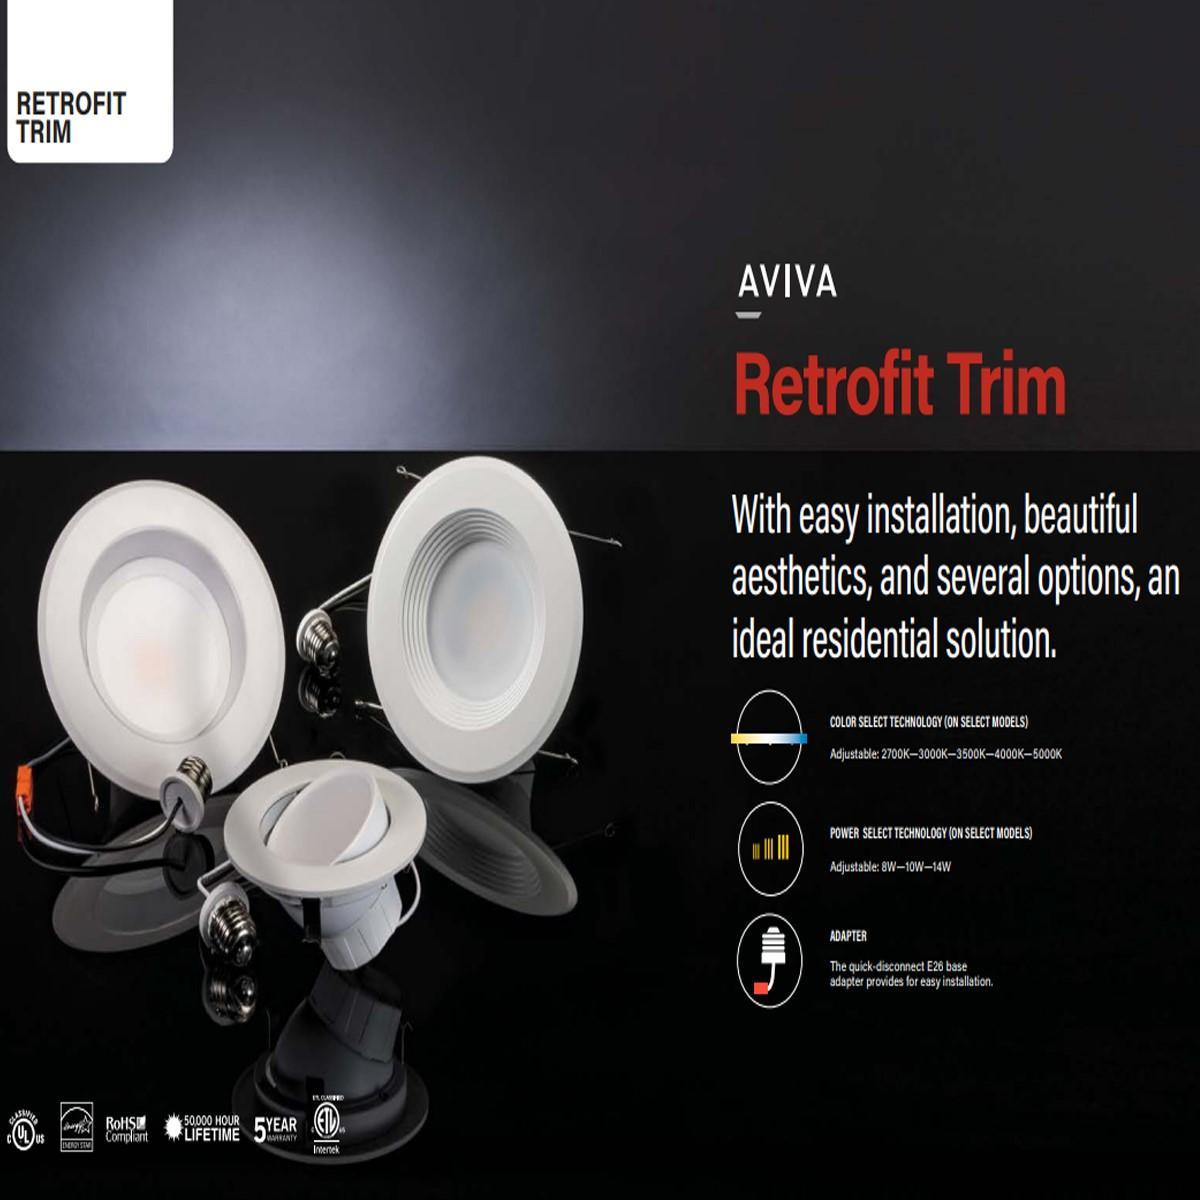 6 In. Aviva Retrofit LED Can Light, Power Select, 1250 Lumens, Selectable CCT, 2700K to 5000K, Baffle Trim